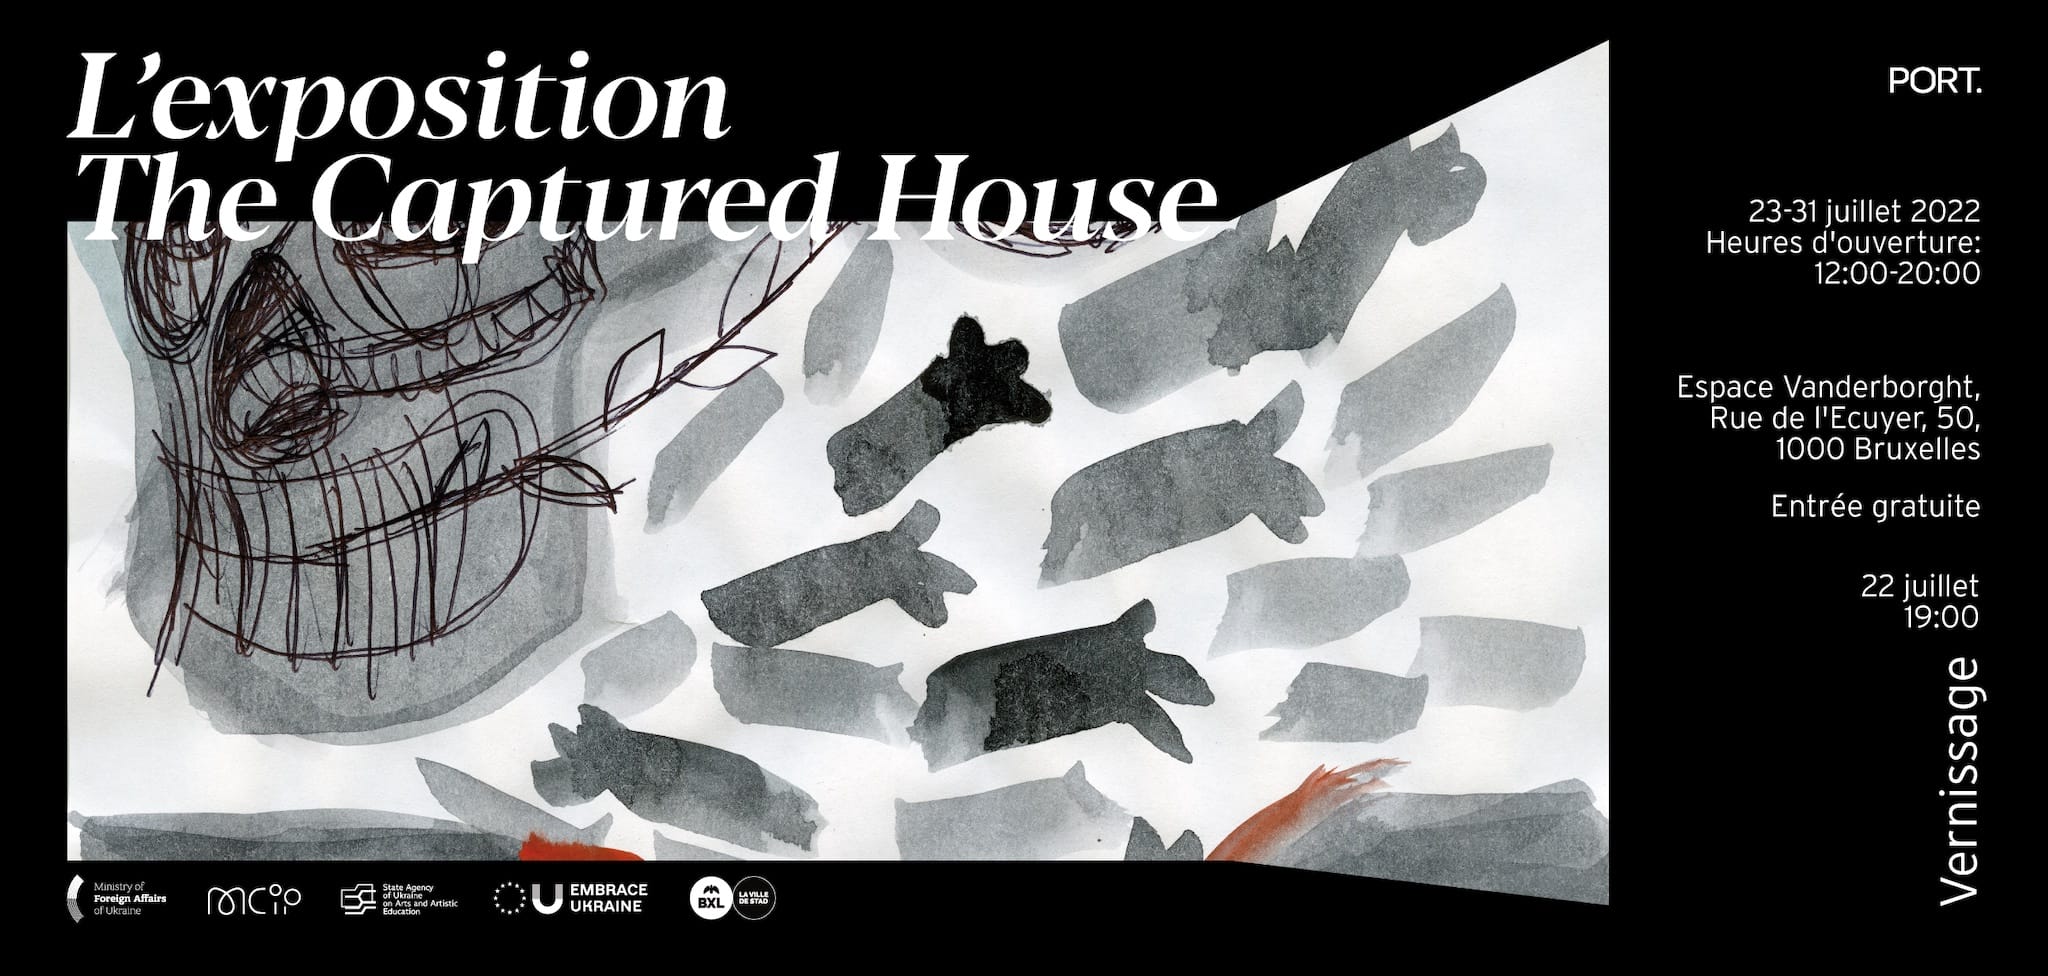 Exposition The Captured House Bruxelles affiche vernissage